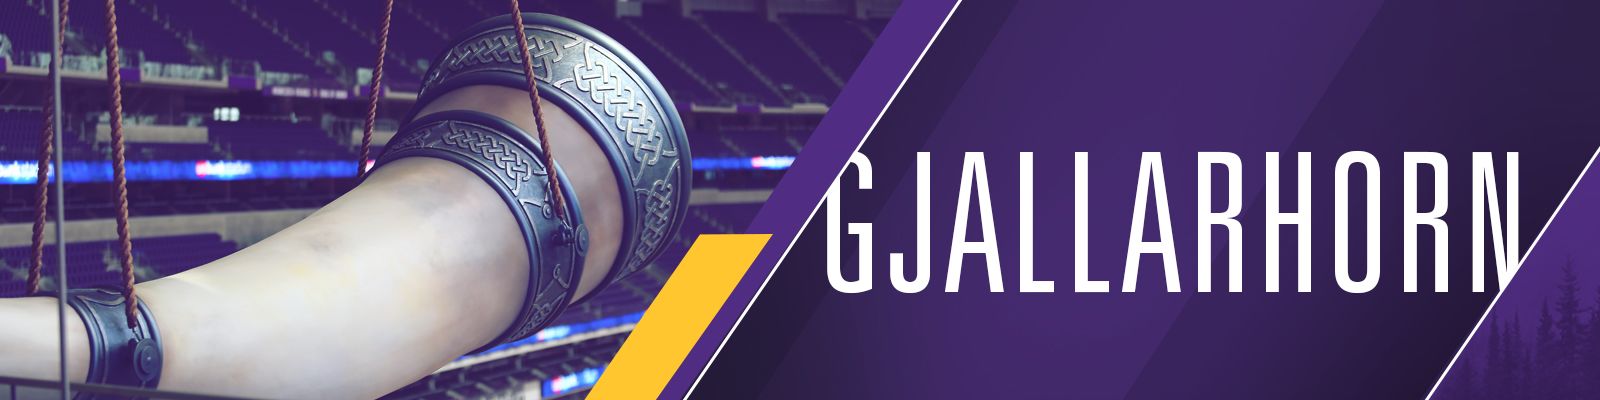 Vikings vs 49ers: E.J. Henderson to sound Gjallarhorn preseason week 3